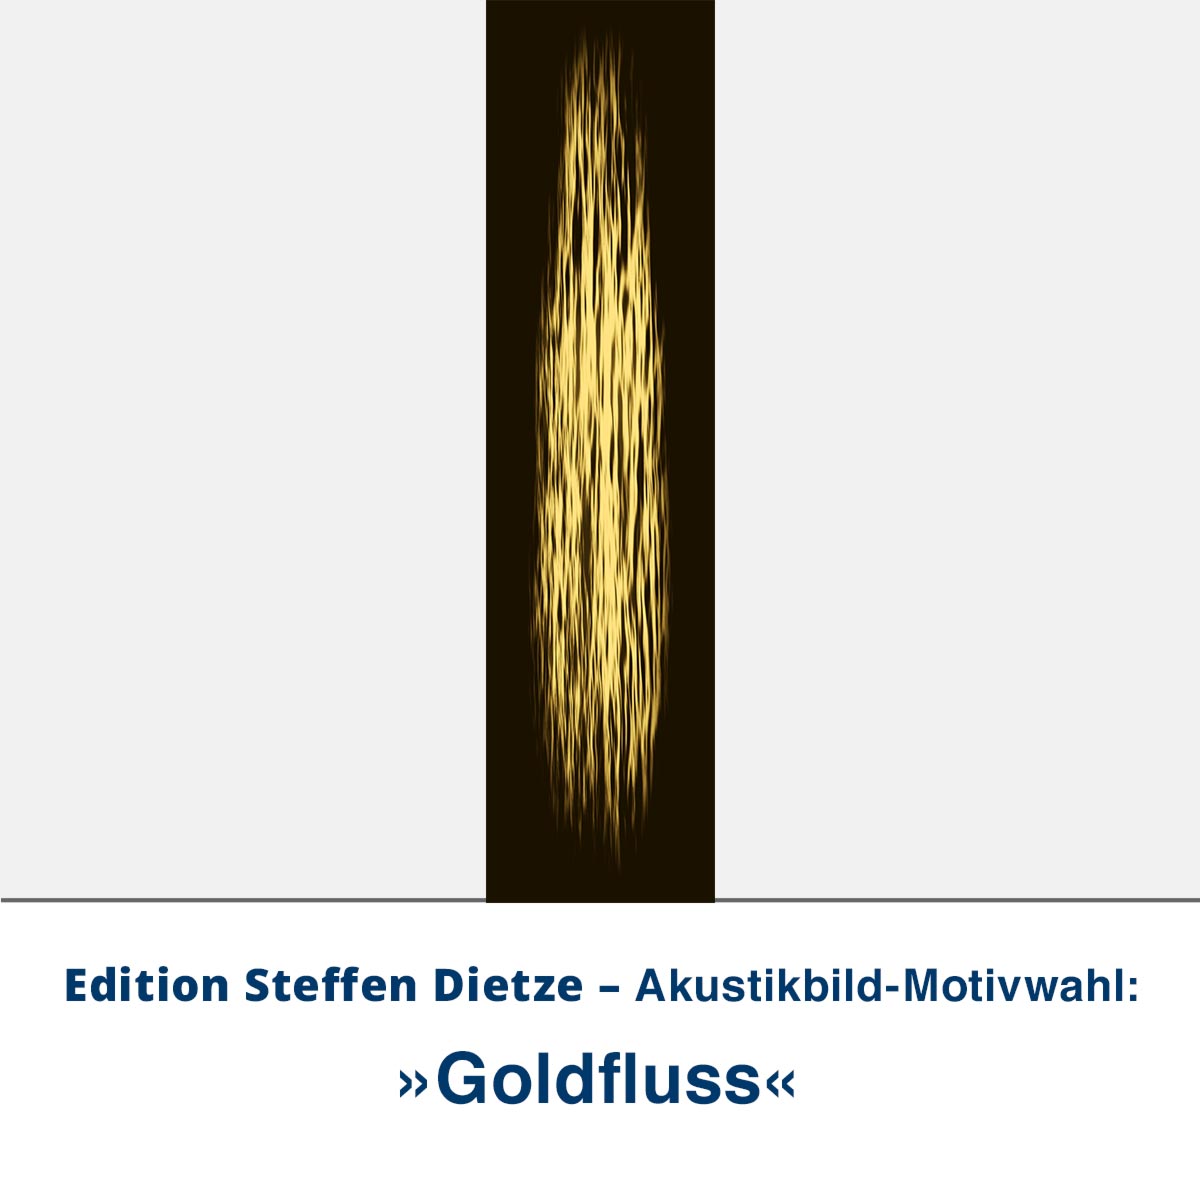 Akustikbild »Goldfluss«, Edition Steffen Dietze